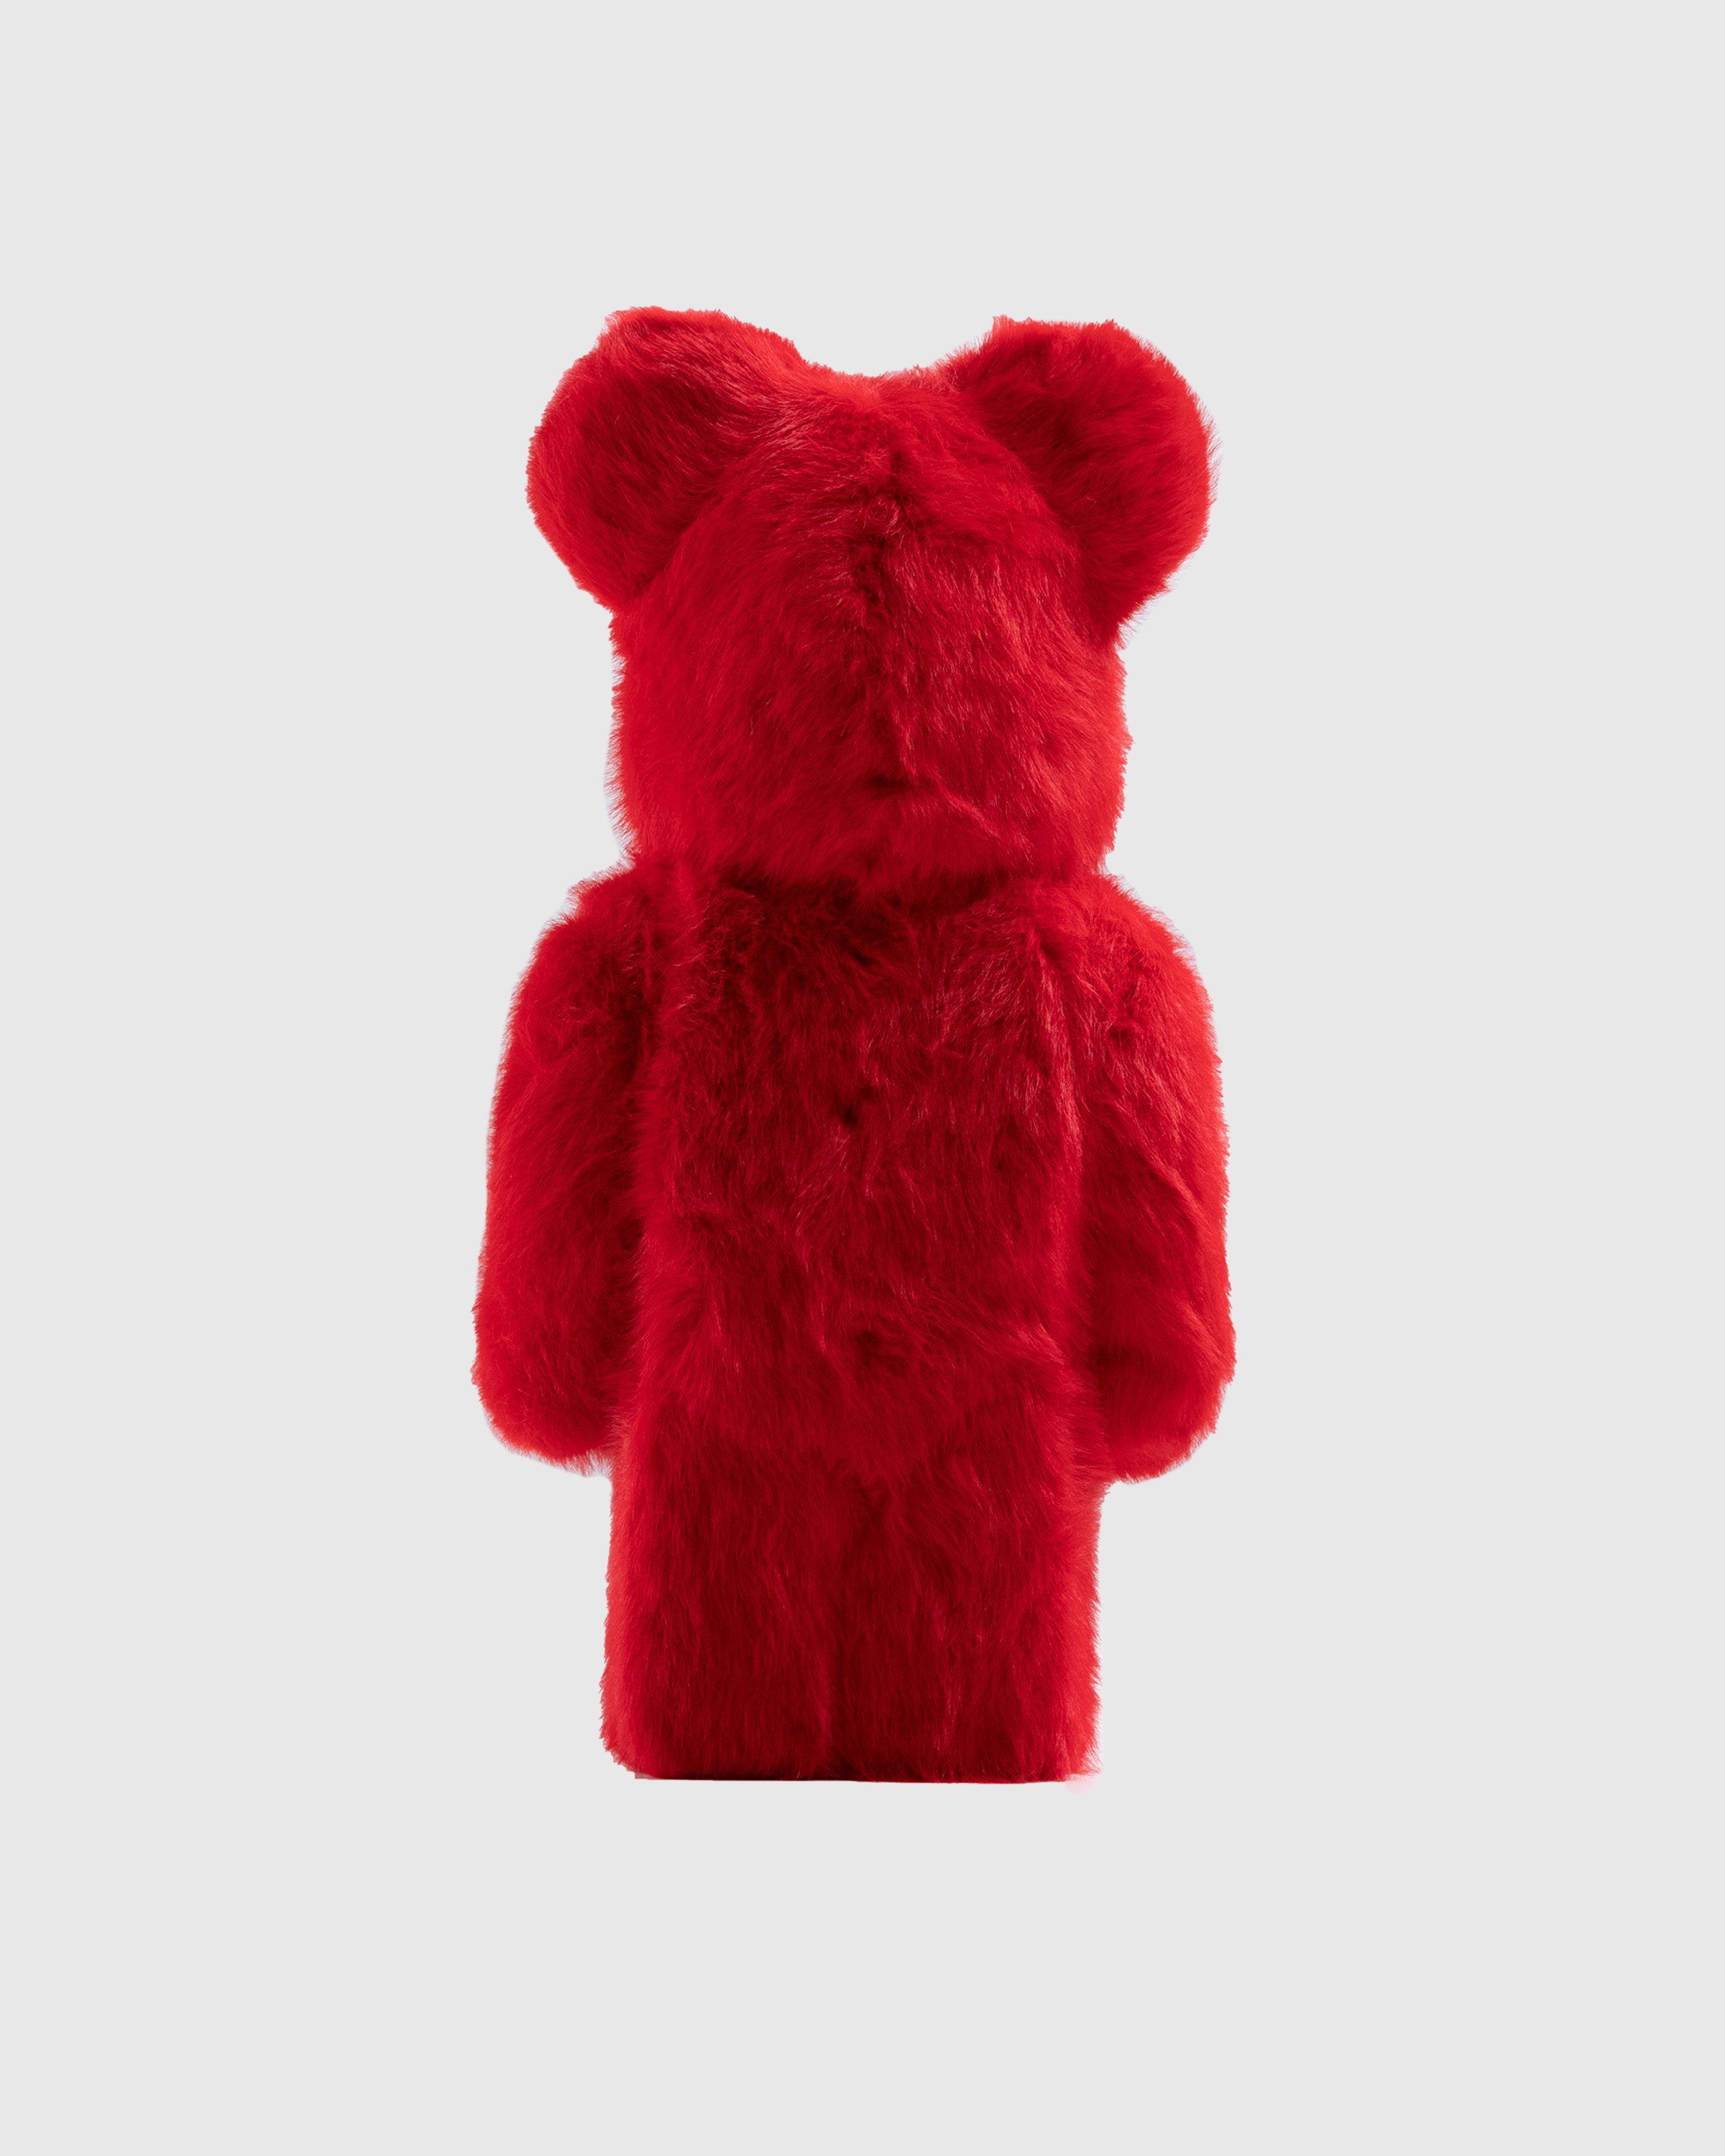 Medicom - Be@rbrick Elmo Costume Version 2 1000％ Red - Lifestyle - Red - Image 3